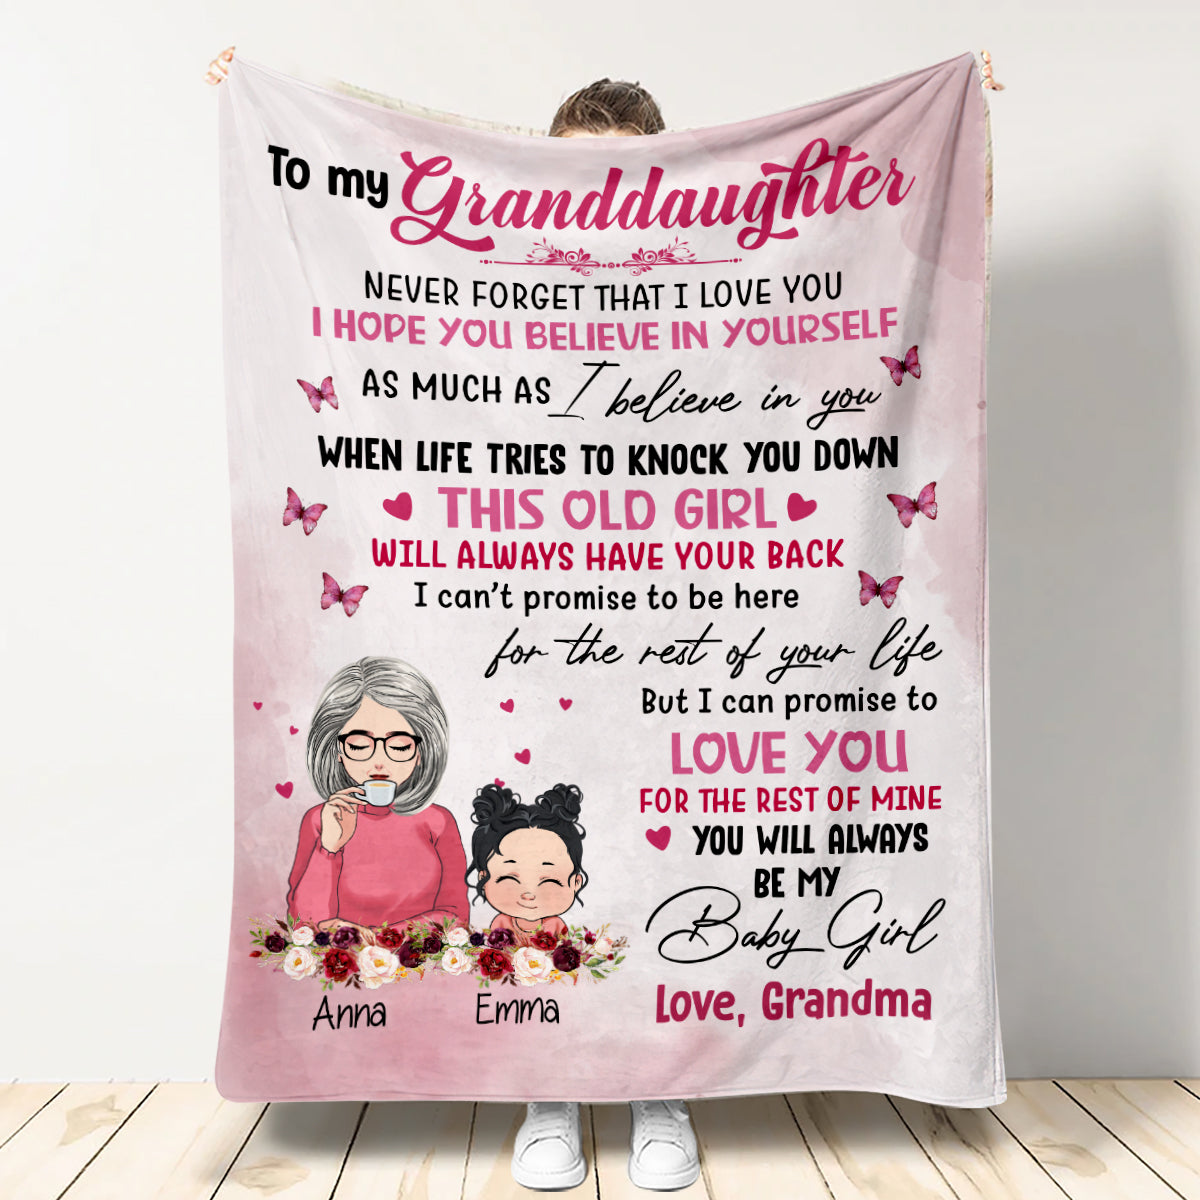 To My Granddaughter - Gift for grandma, granddaughter, grandson - Personalized Blanket